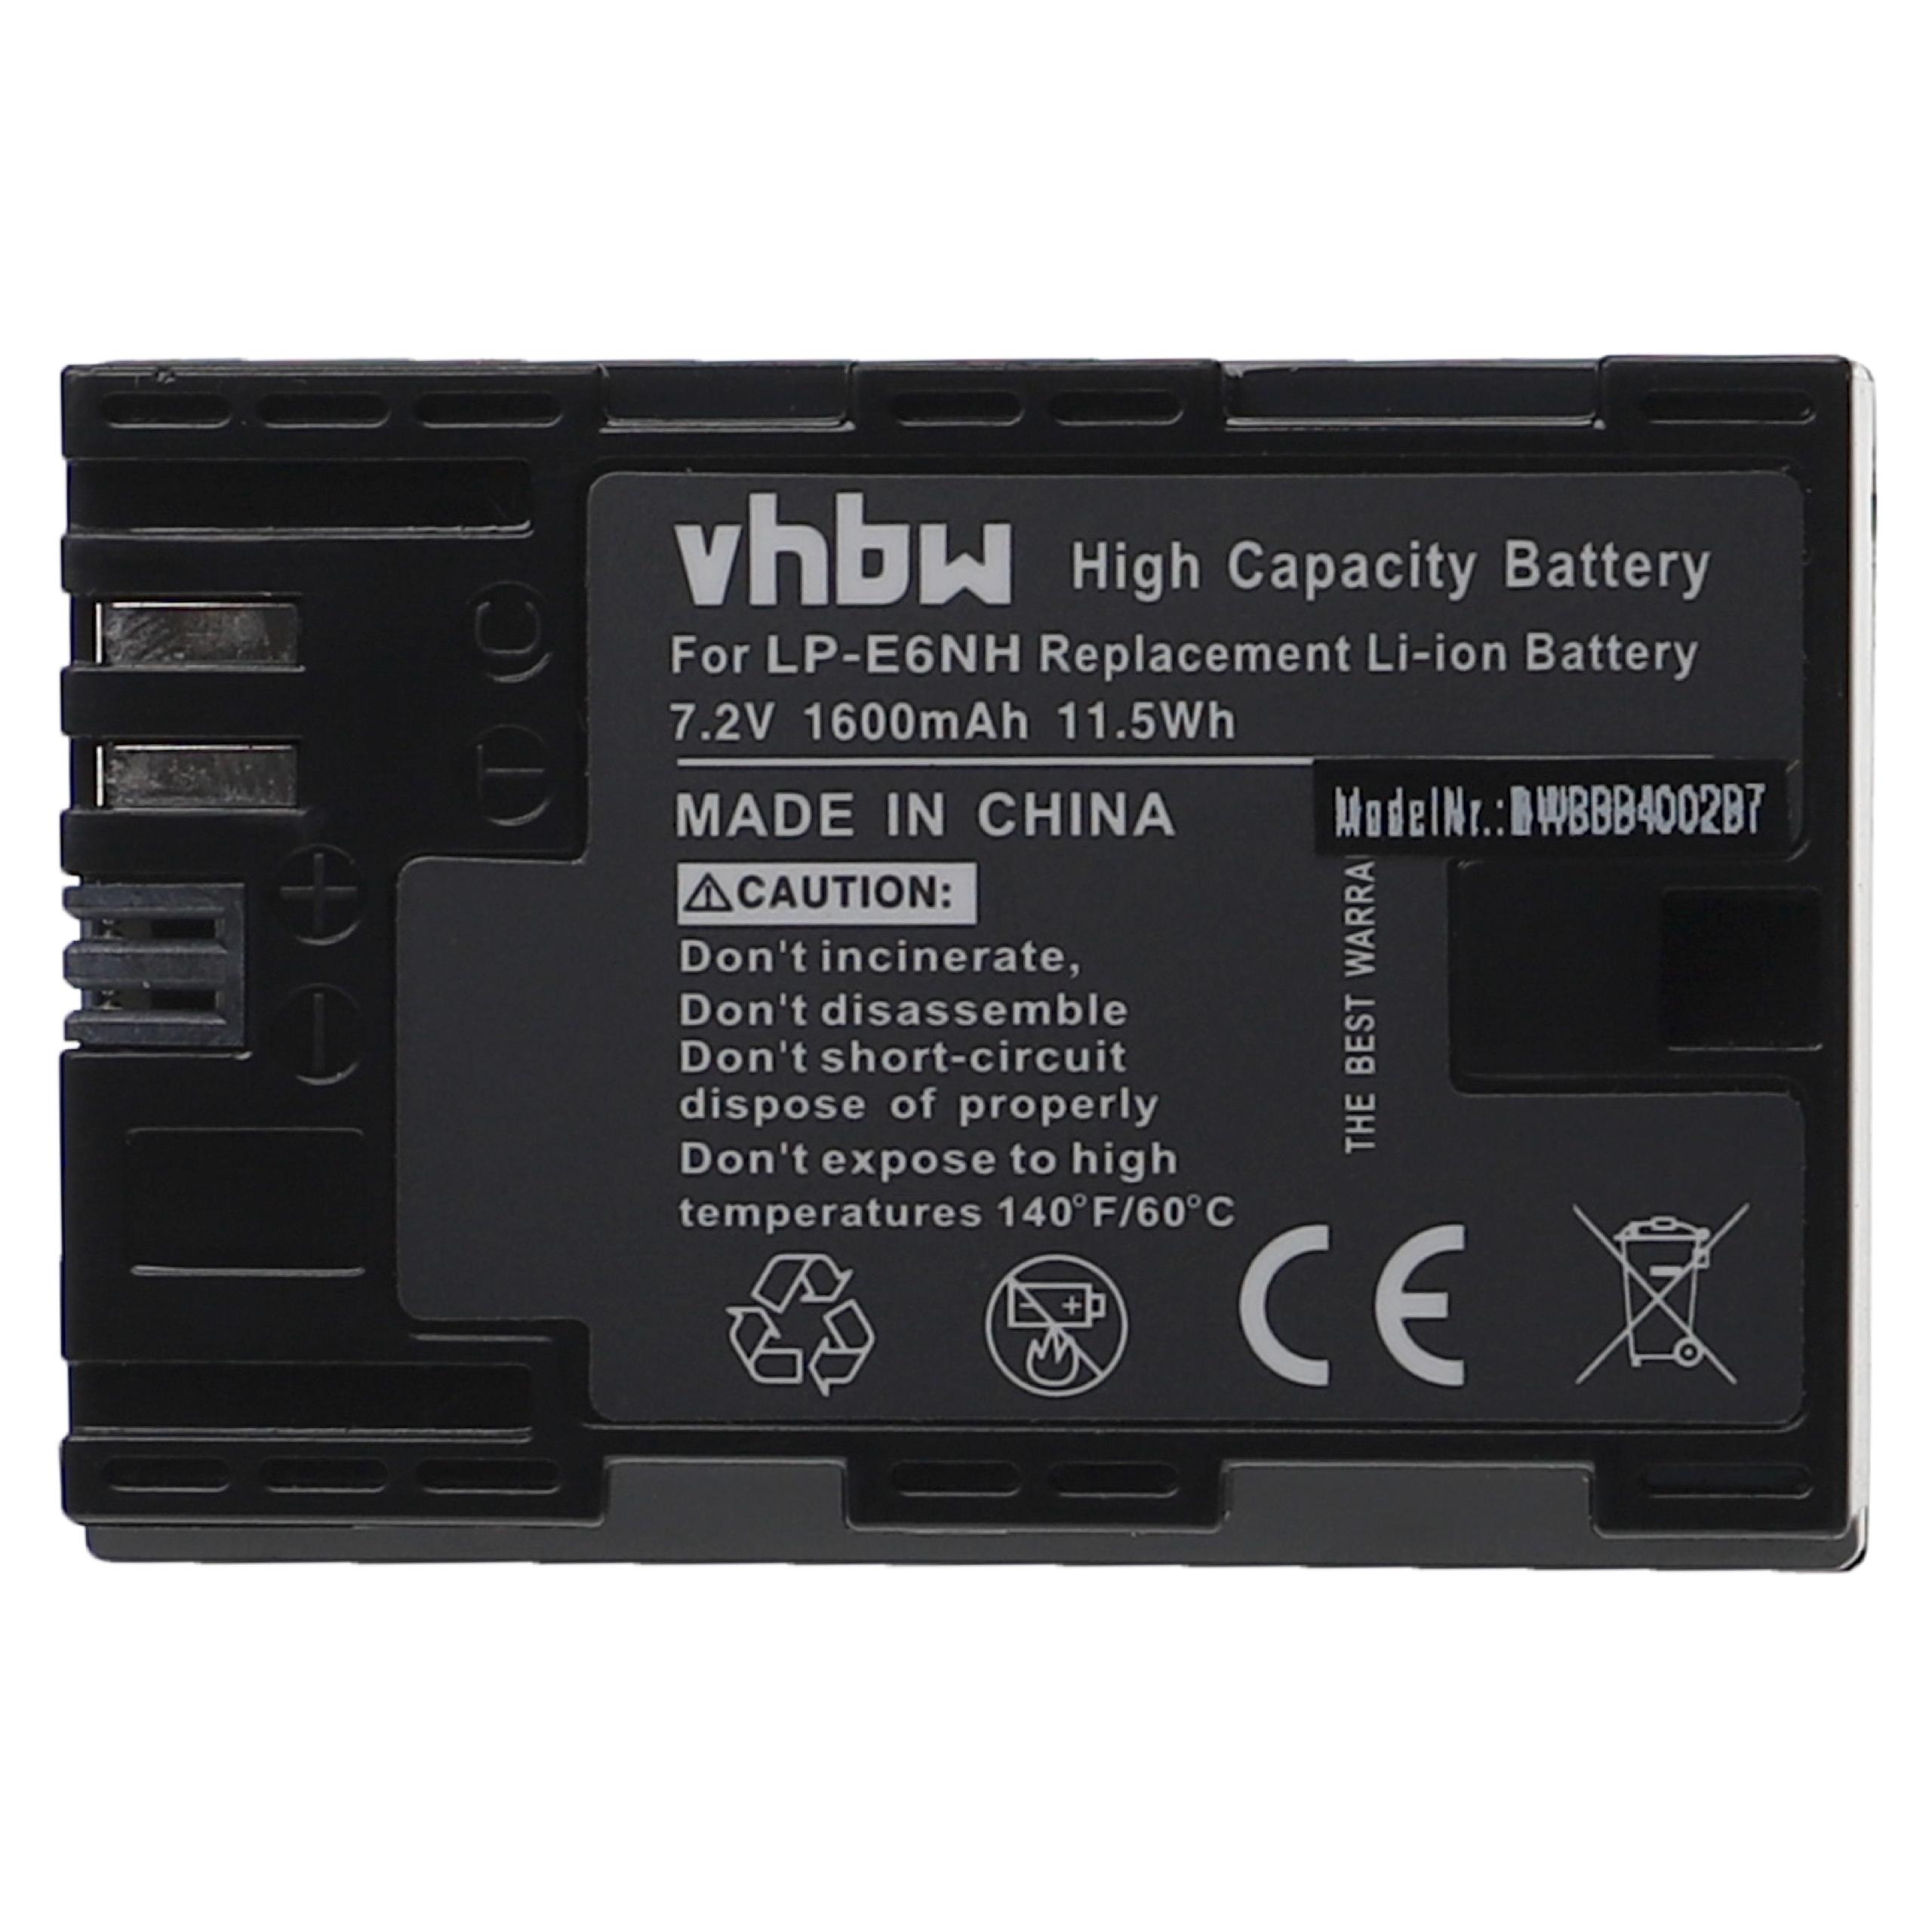 Battery Replacement for Canon LP-E6, LP-E6NH - 1600mAh, 7.2V, Li-Ion